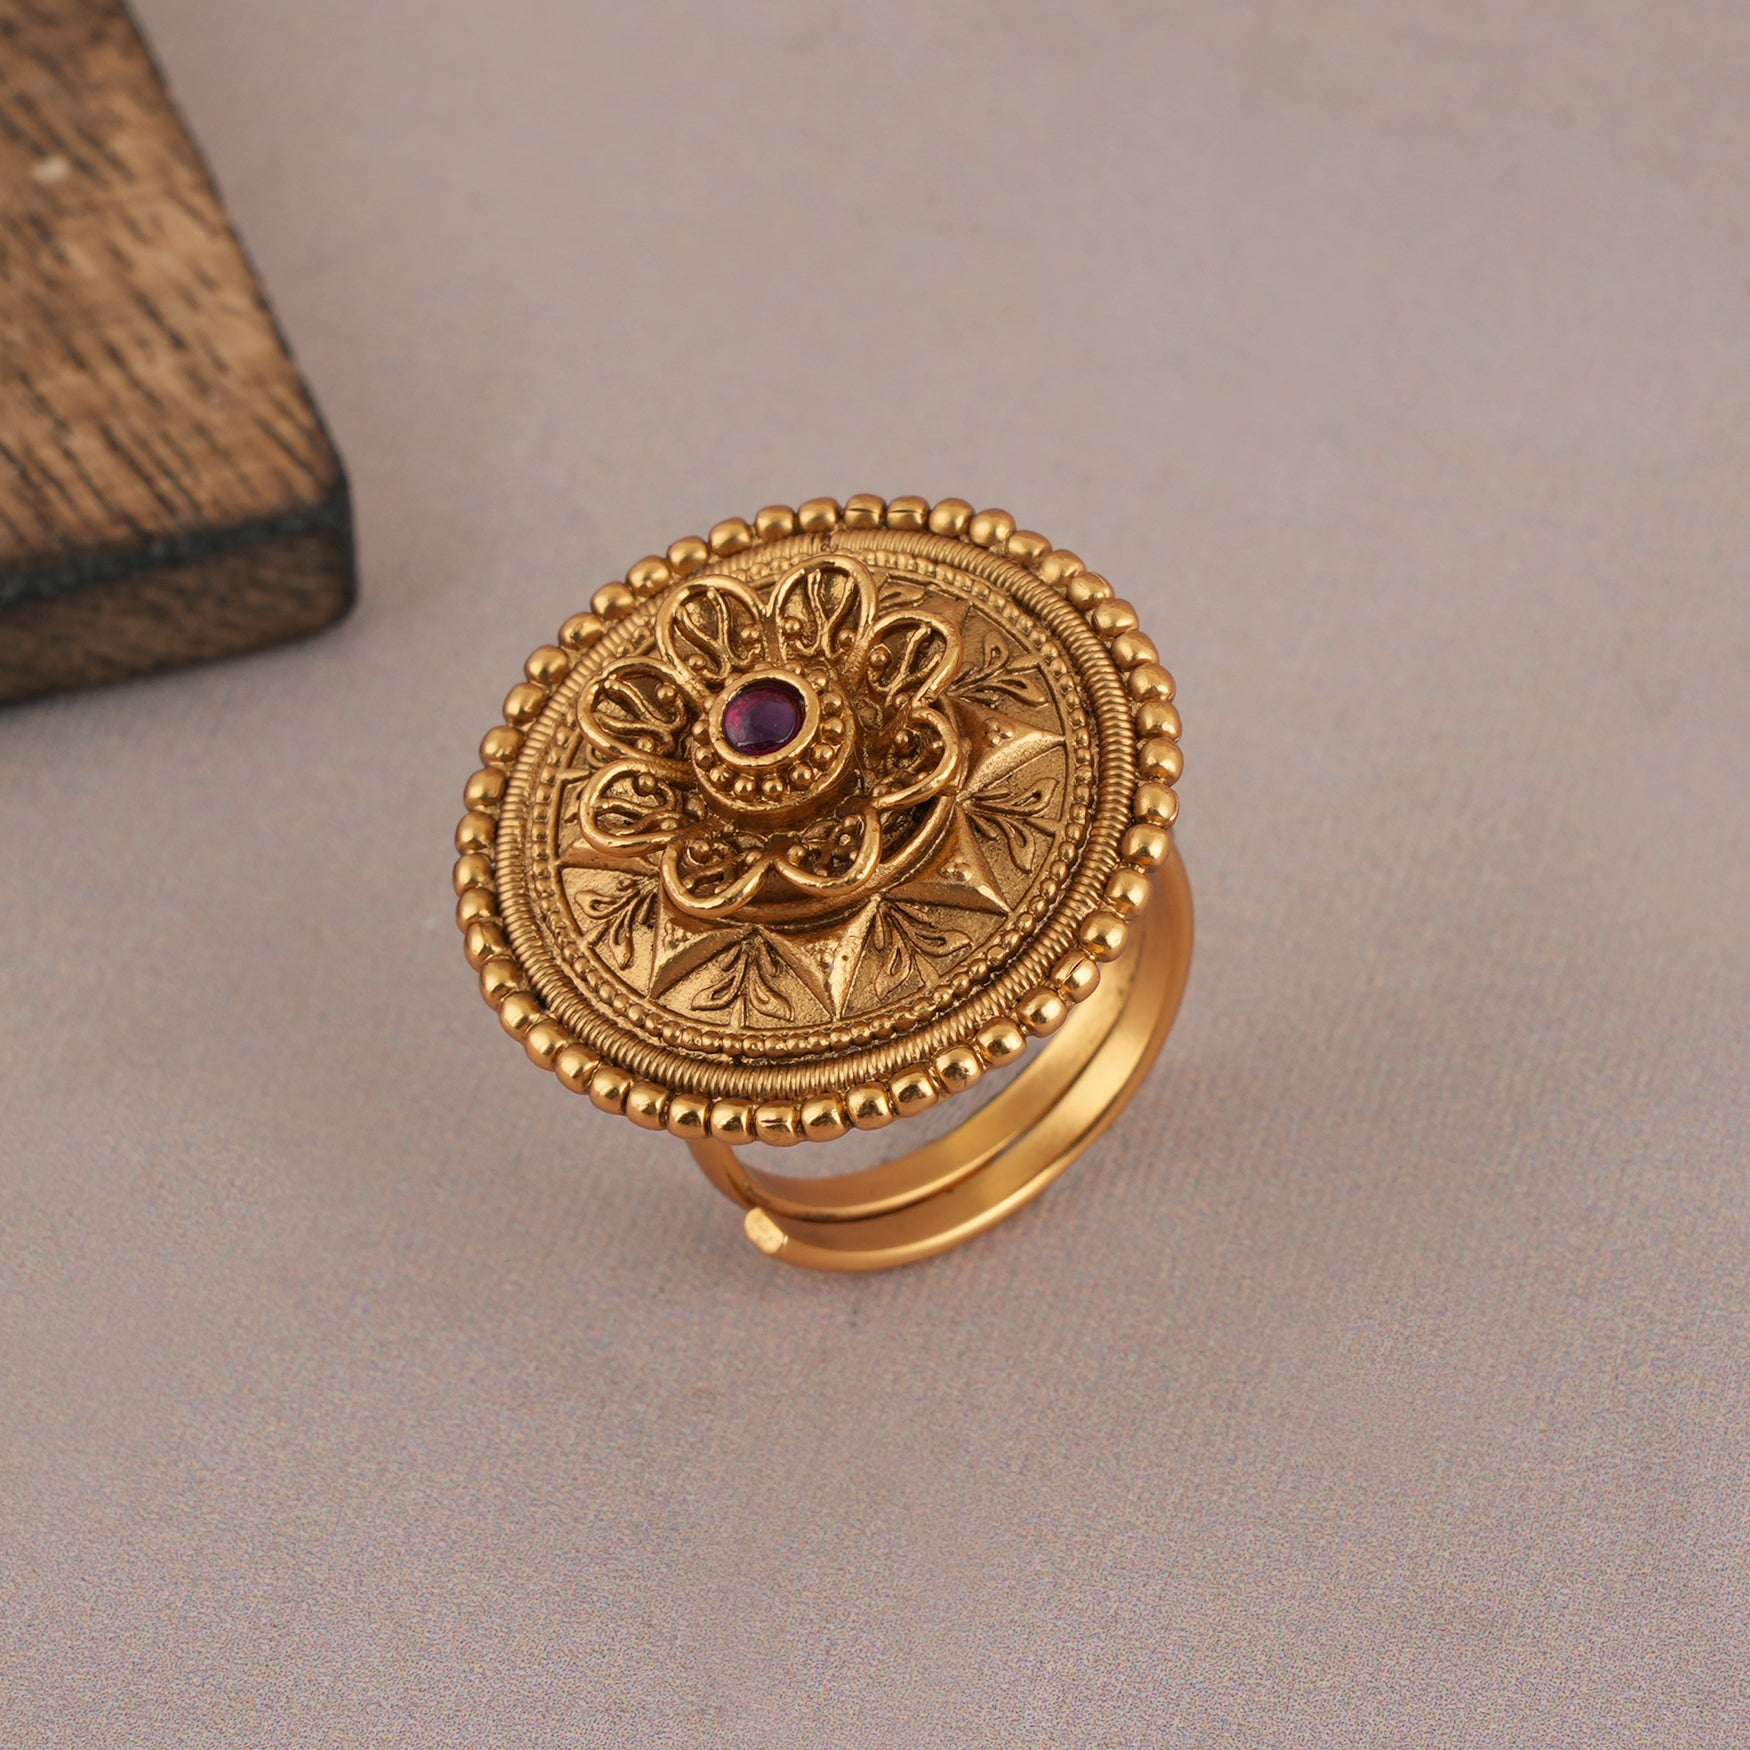 Antique gold floral adjustable ring for women